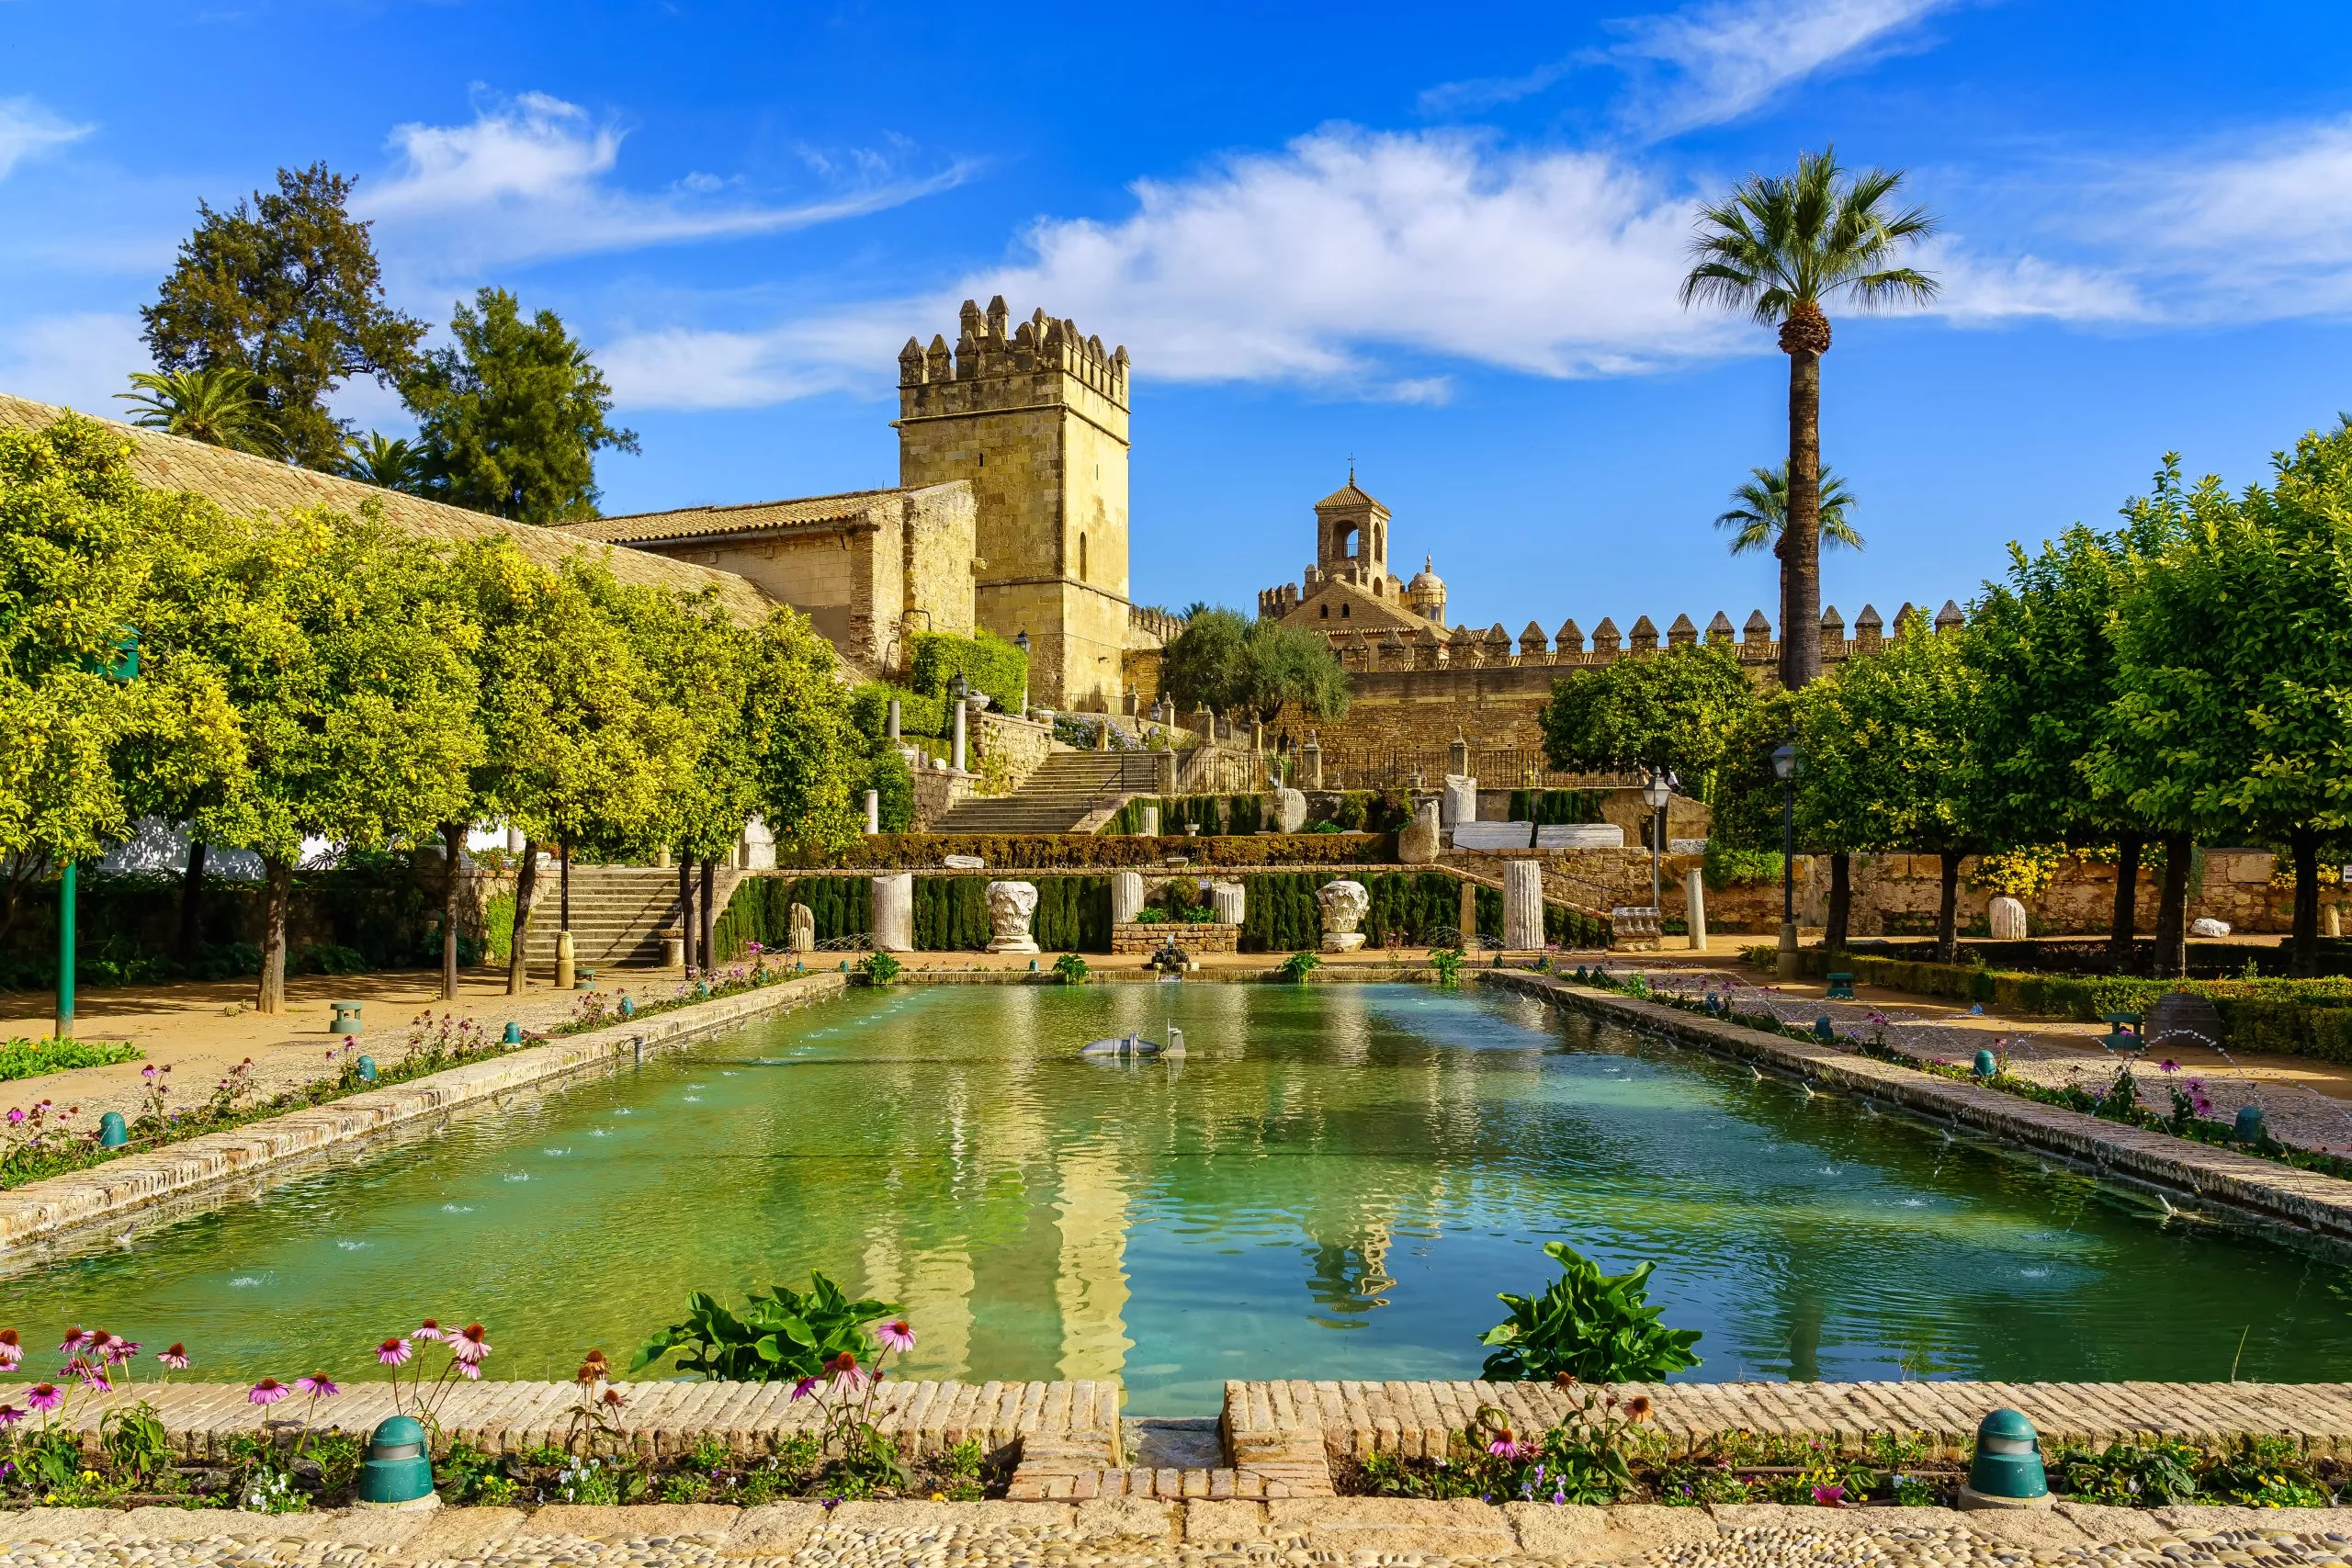 Cordoba, Spain, November 12, 2021: Panoramic view of the impressive Alcazar de Cordoba and its royal gardens in Andalusia, Spain.